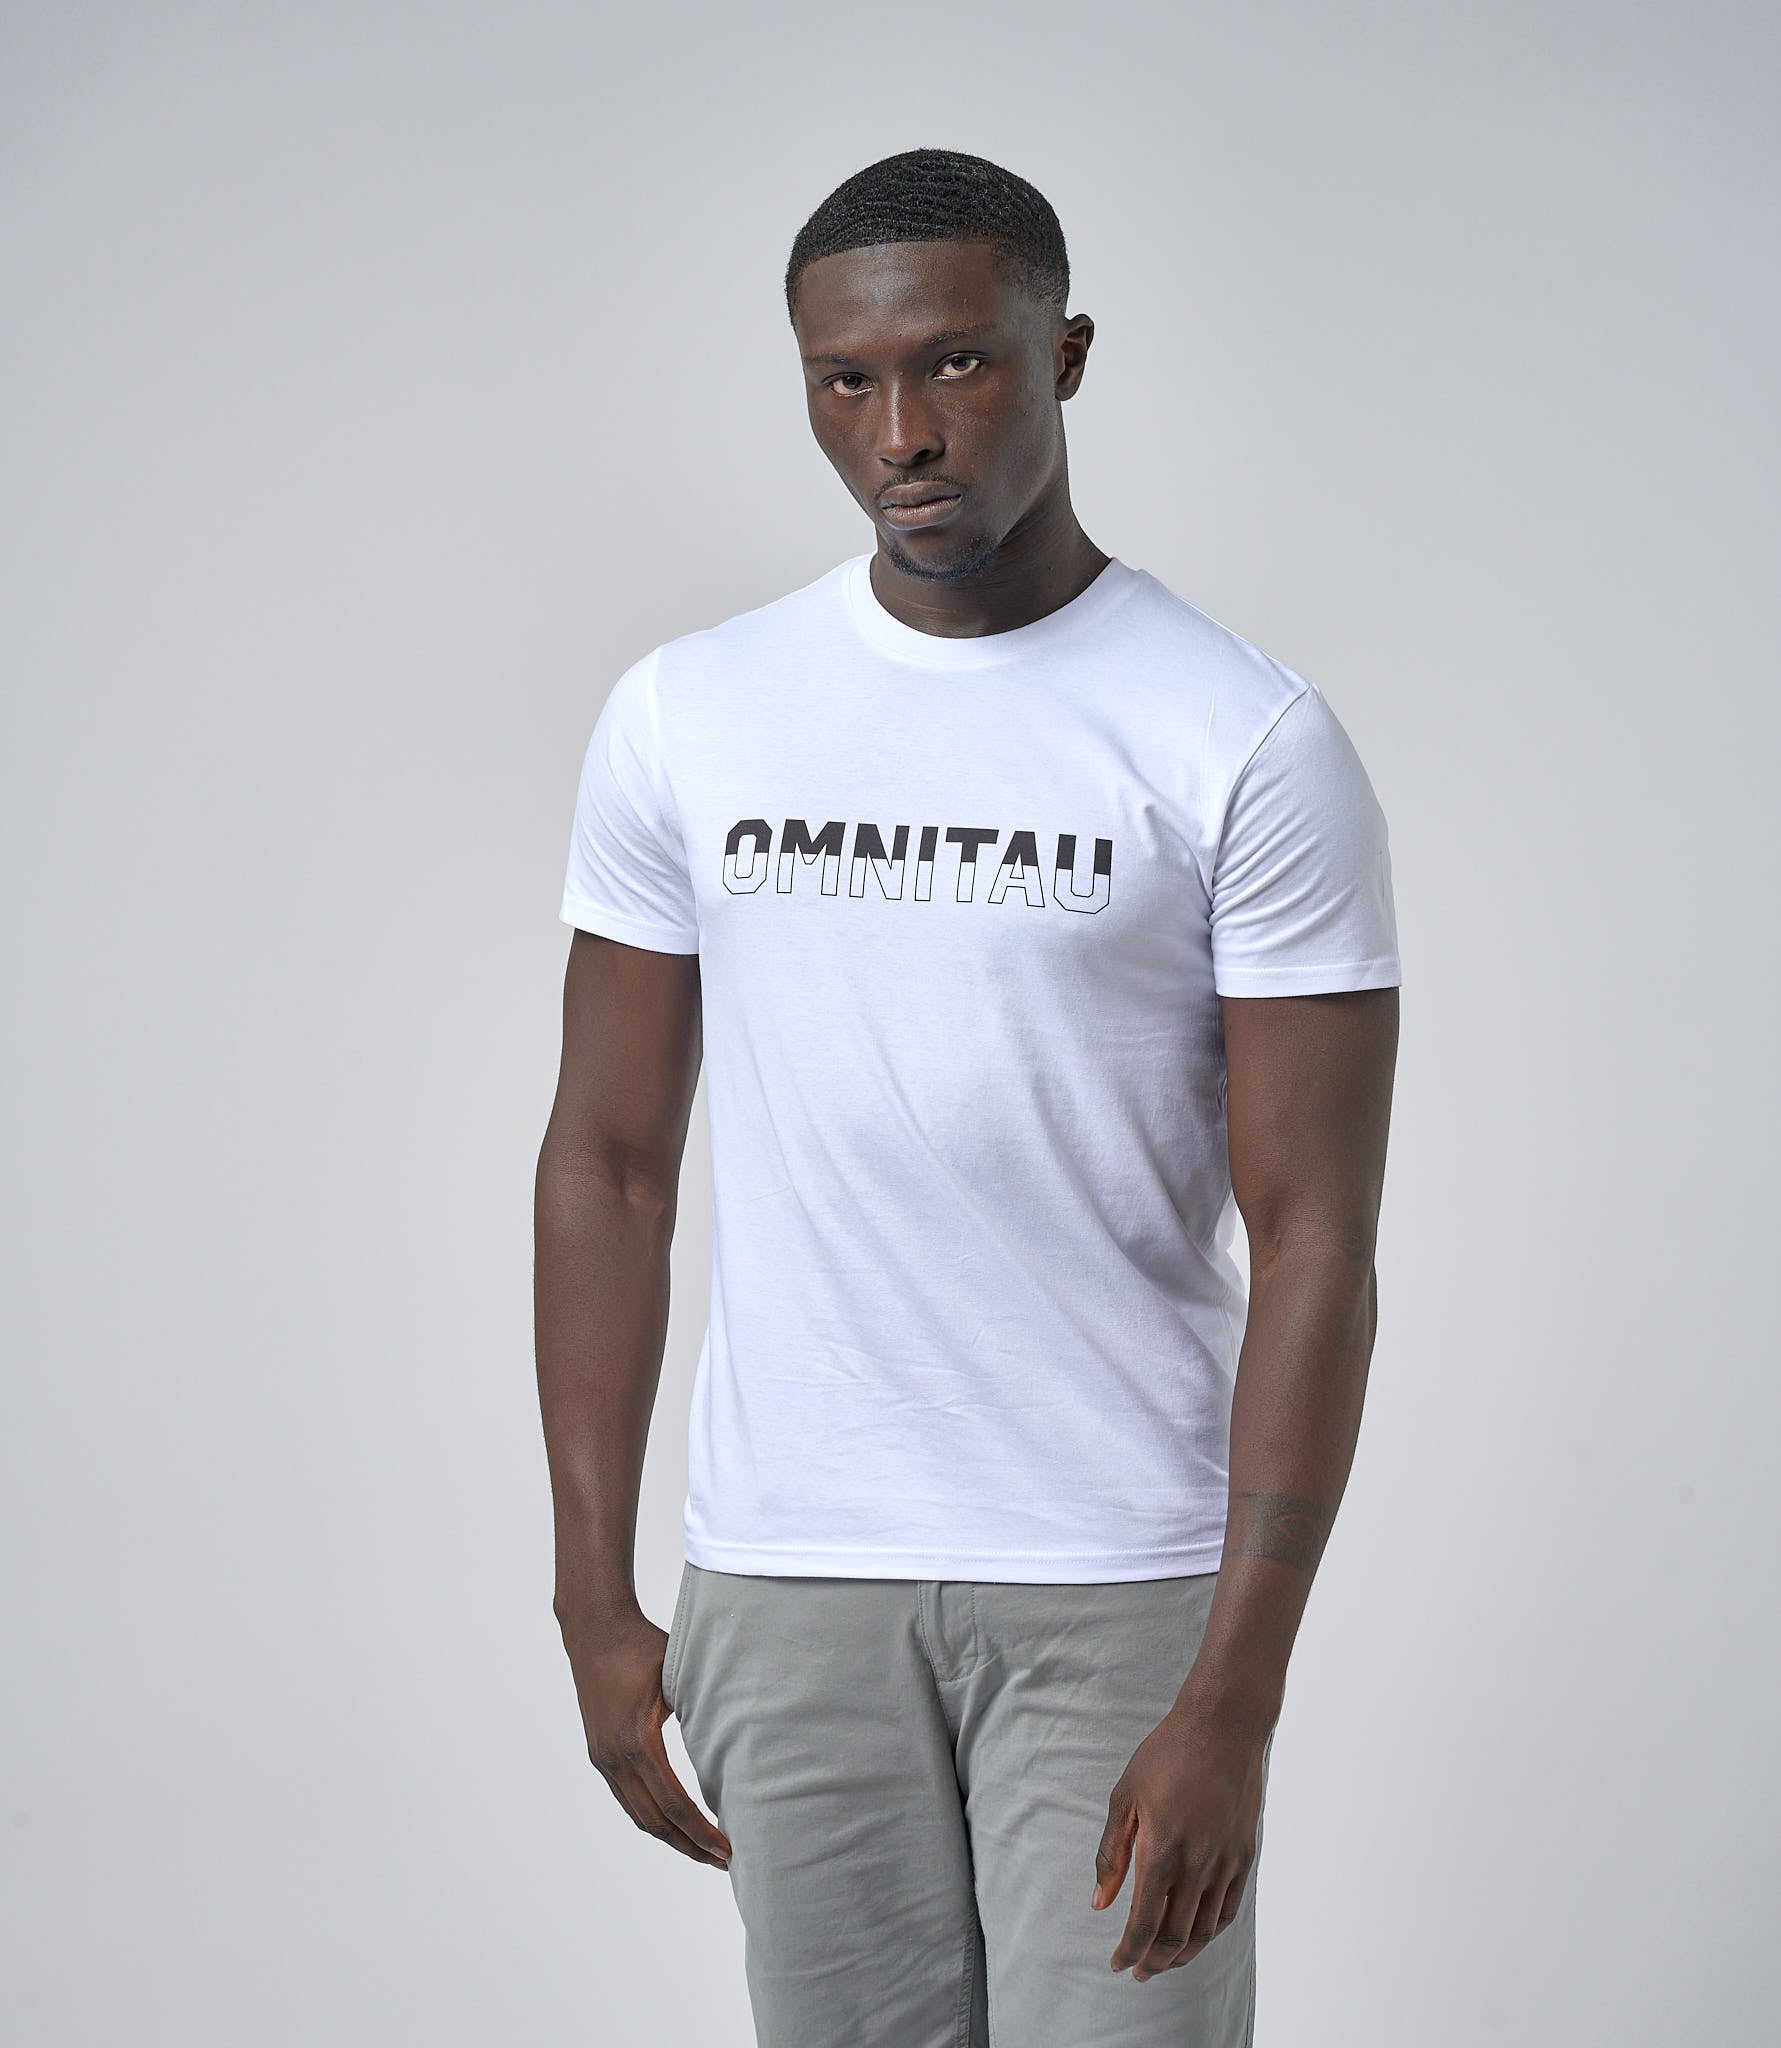 Omnitau Men's Drive Organic Cotton Balance Crew Neck T-Shirt - White